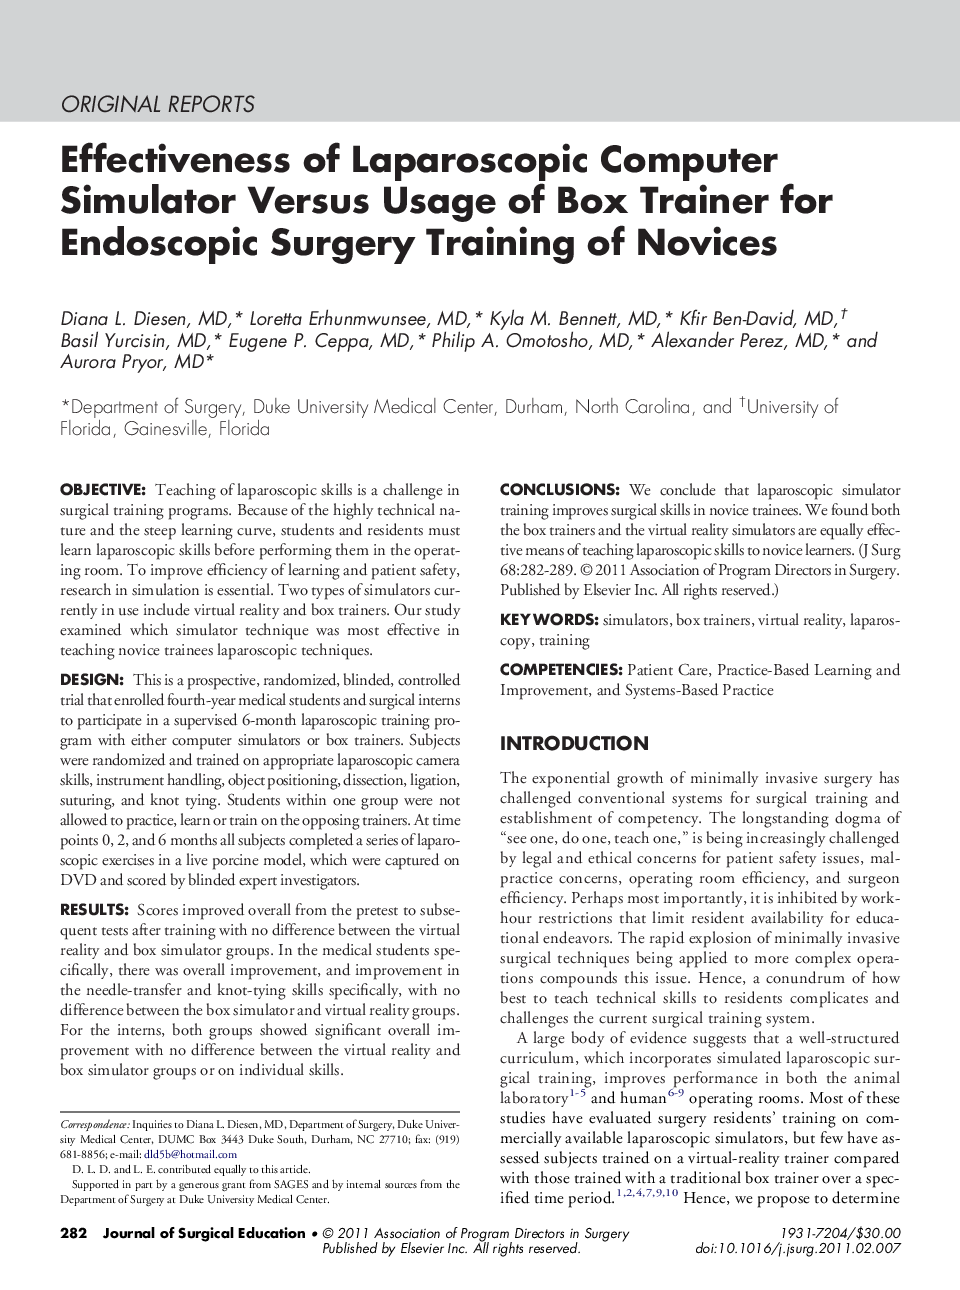 Effectiveness of Laparoscopic Computer Simulator Versus Usage of Box Trainer for Endoscopic Surgery Training of Novices 